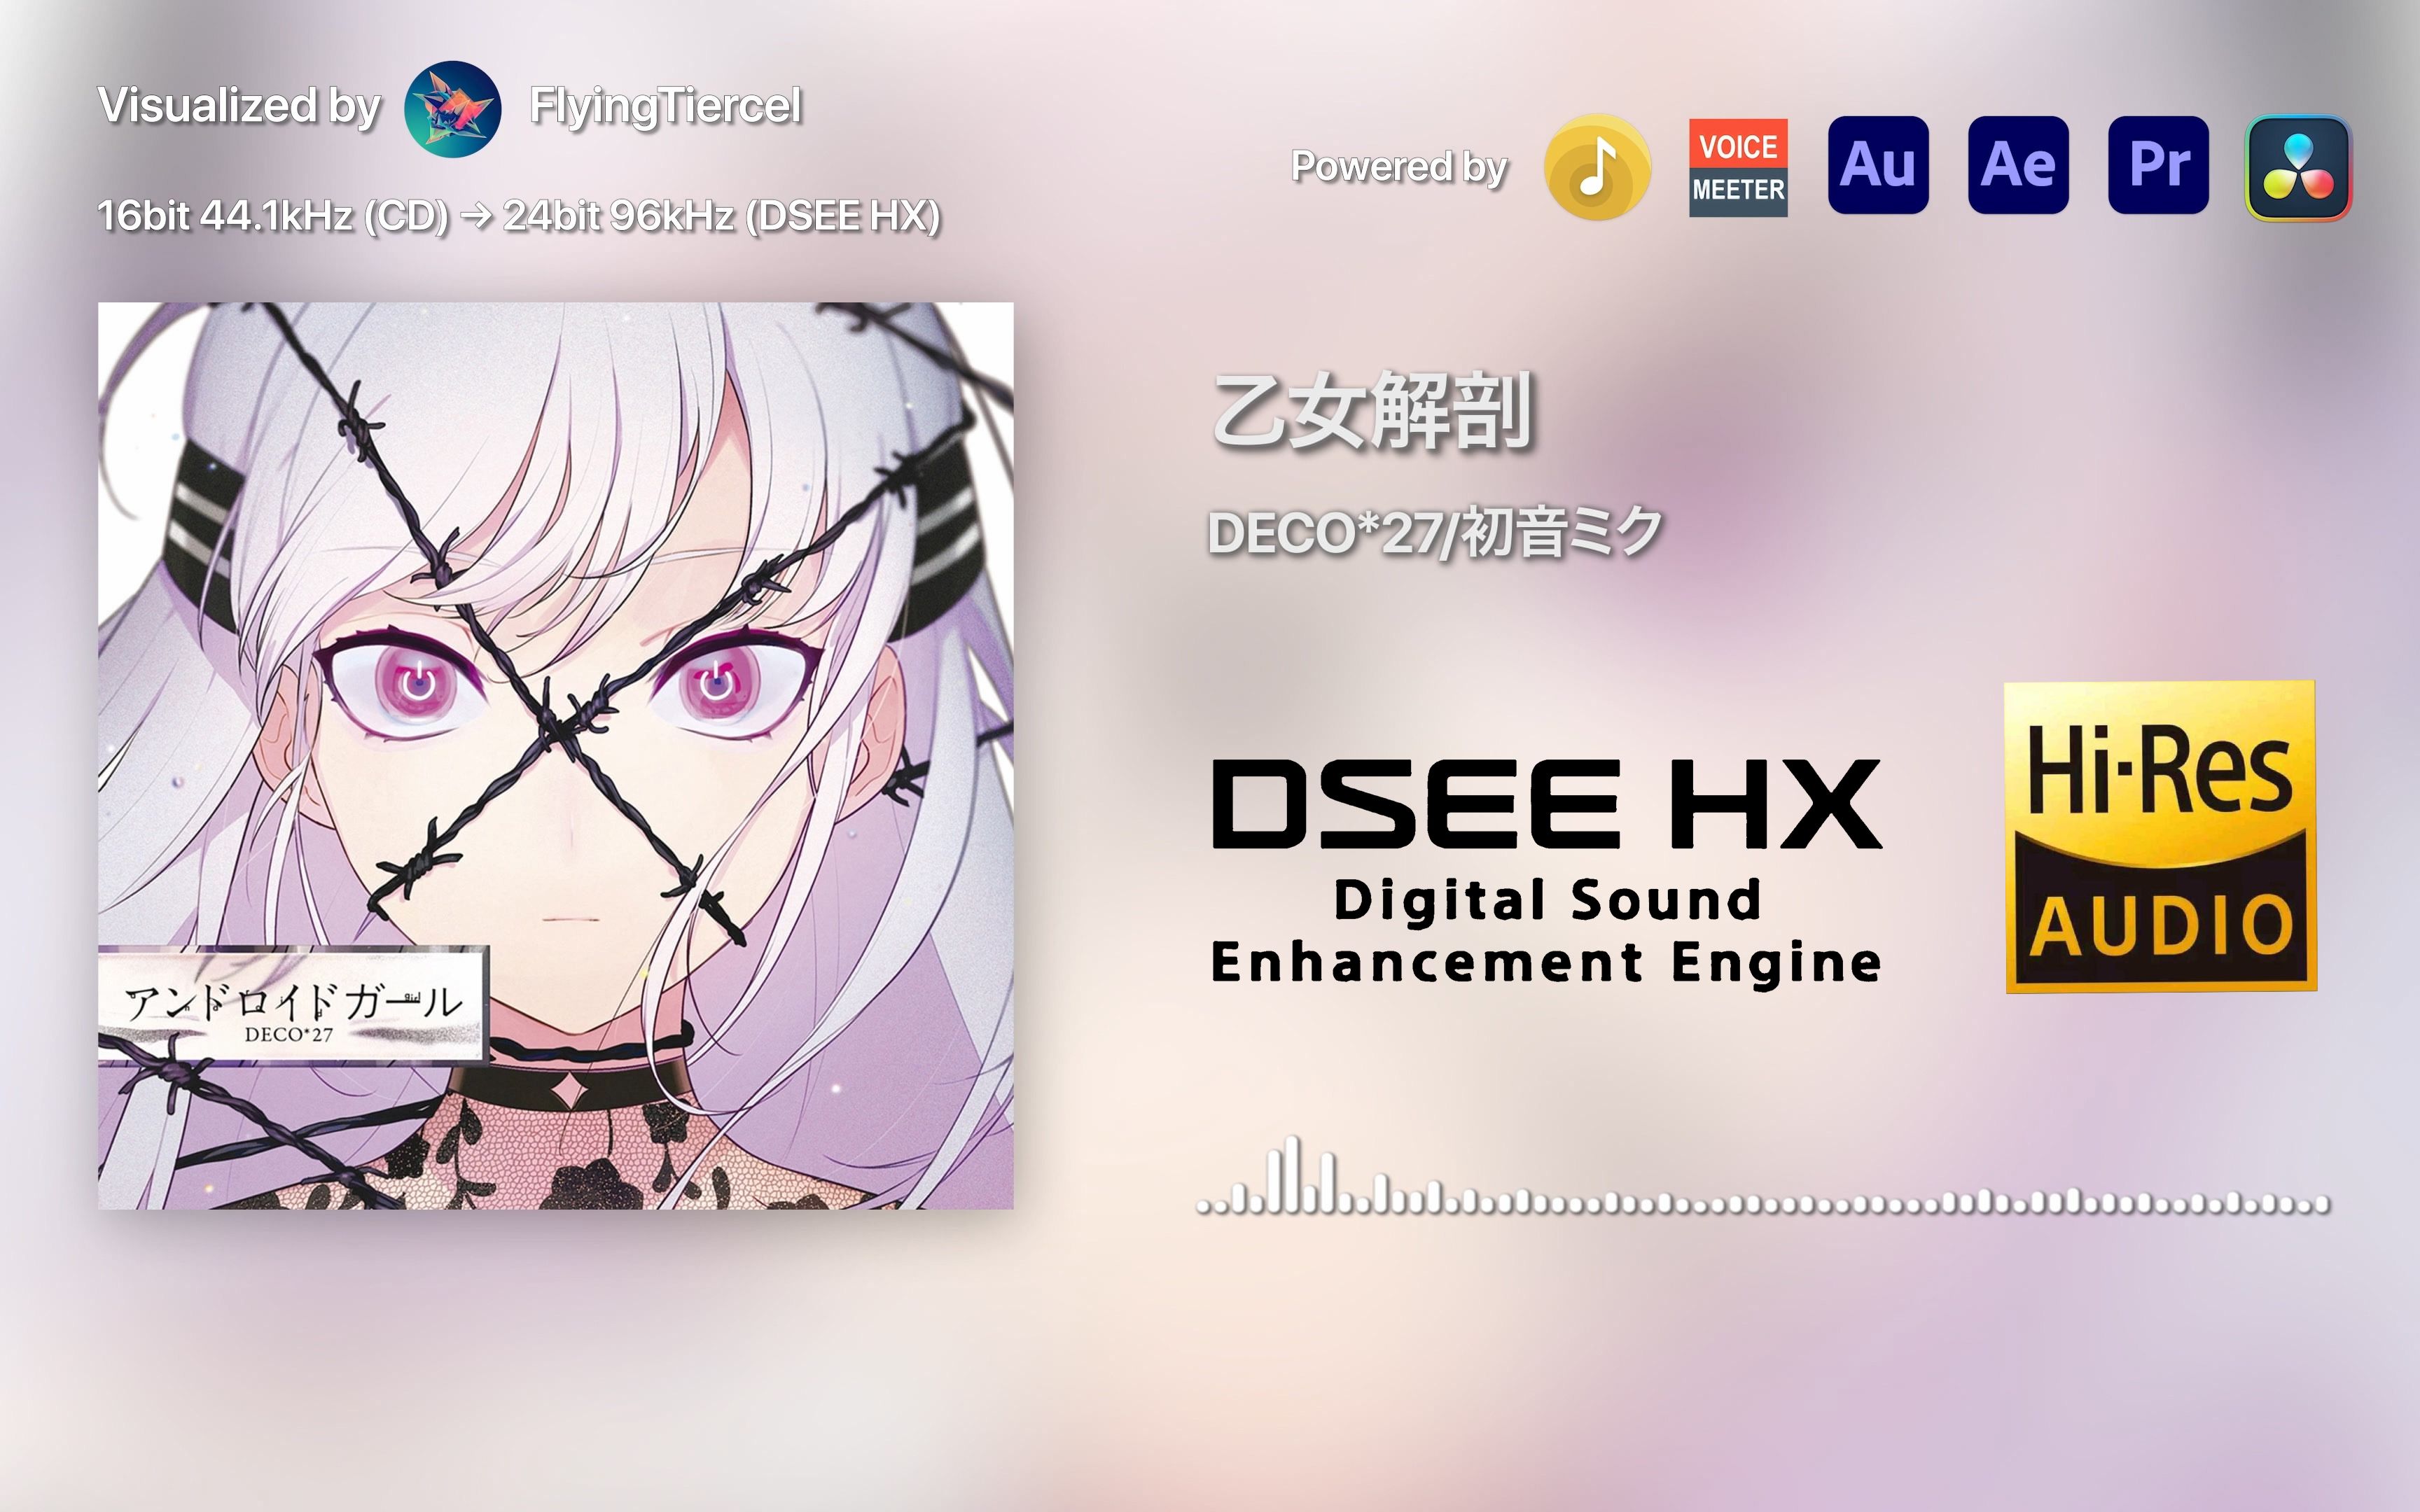 [4K Hi-Res] 乙女解剖 - DECO*27/初音ミク [24bit/96kHz by DSEE HX] 音频可视化